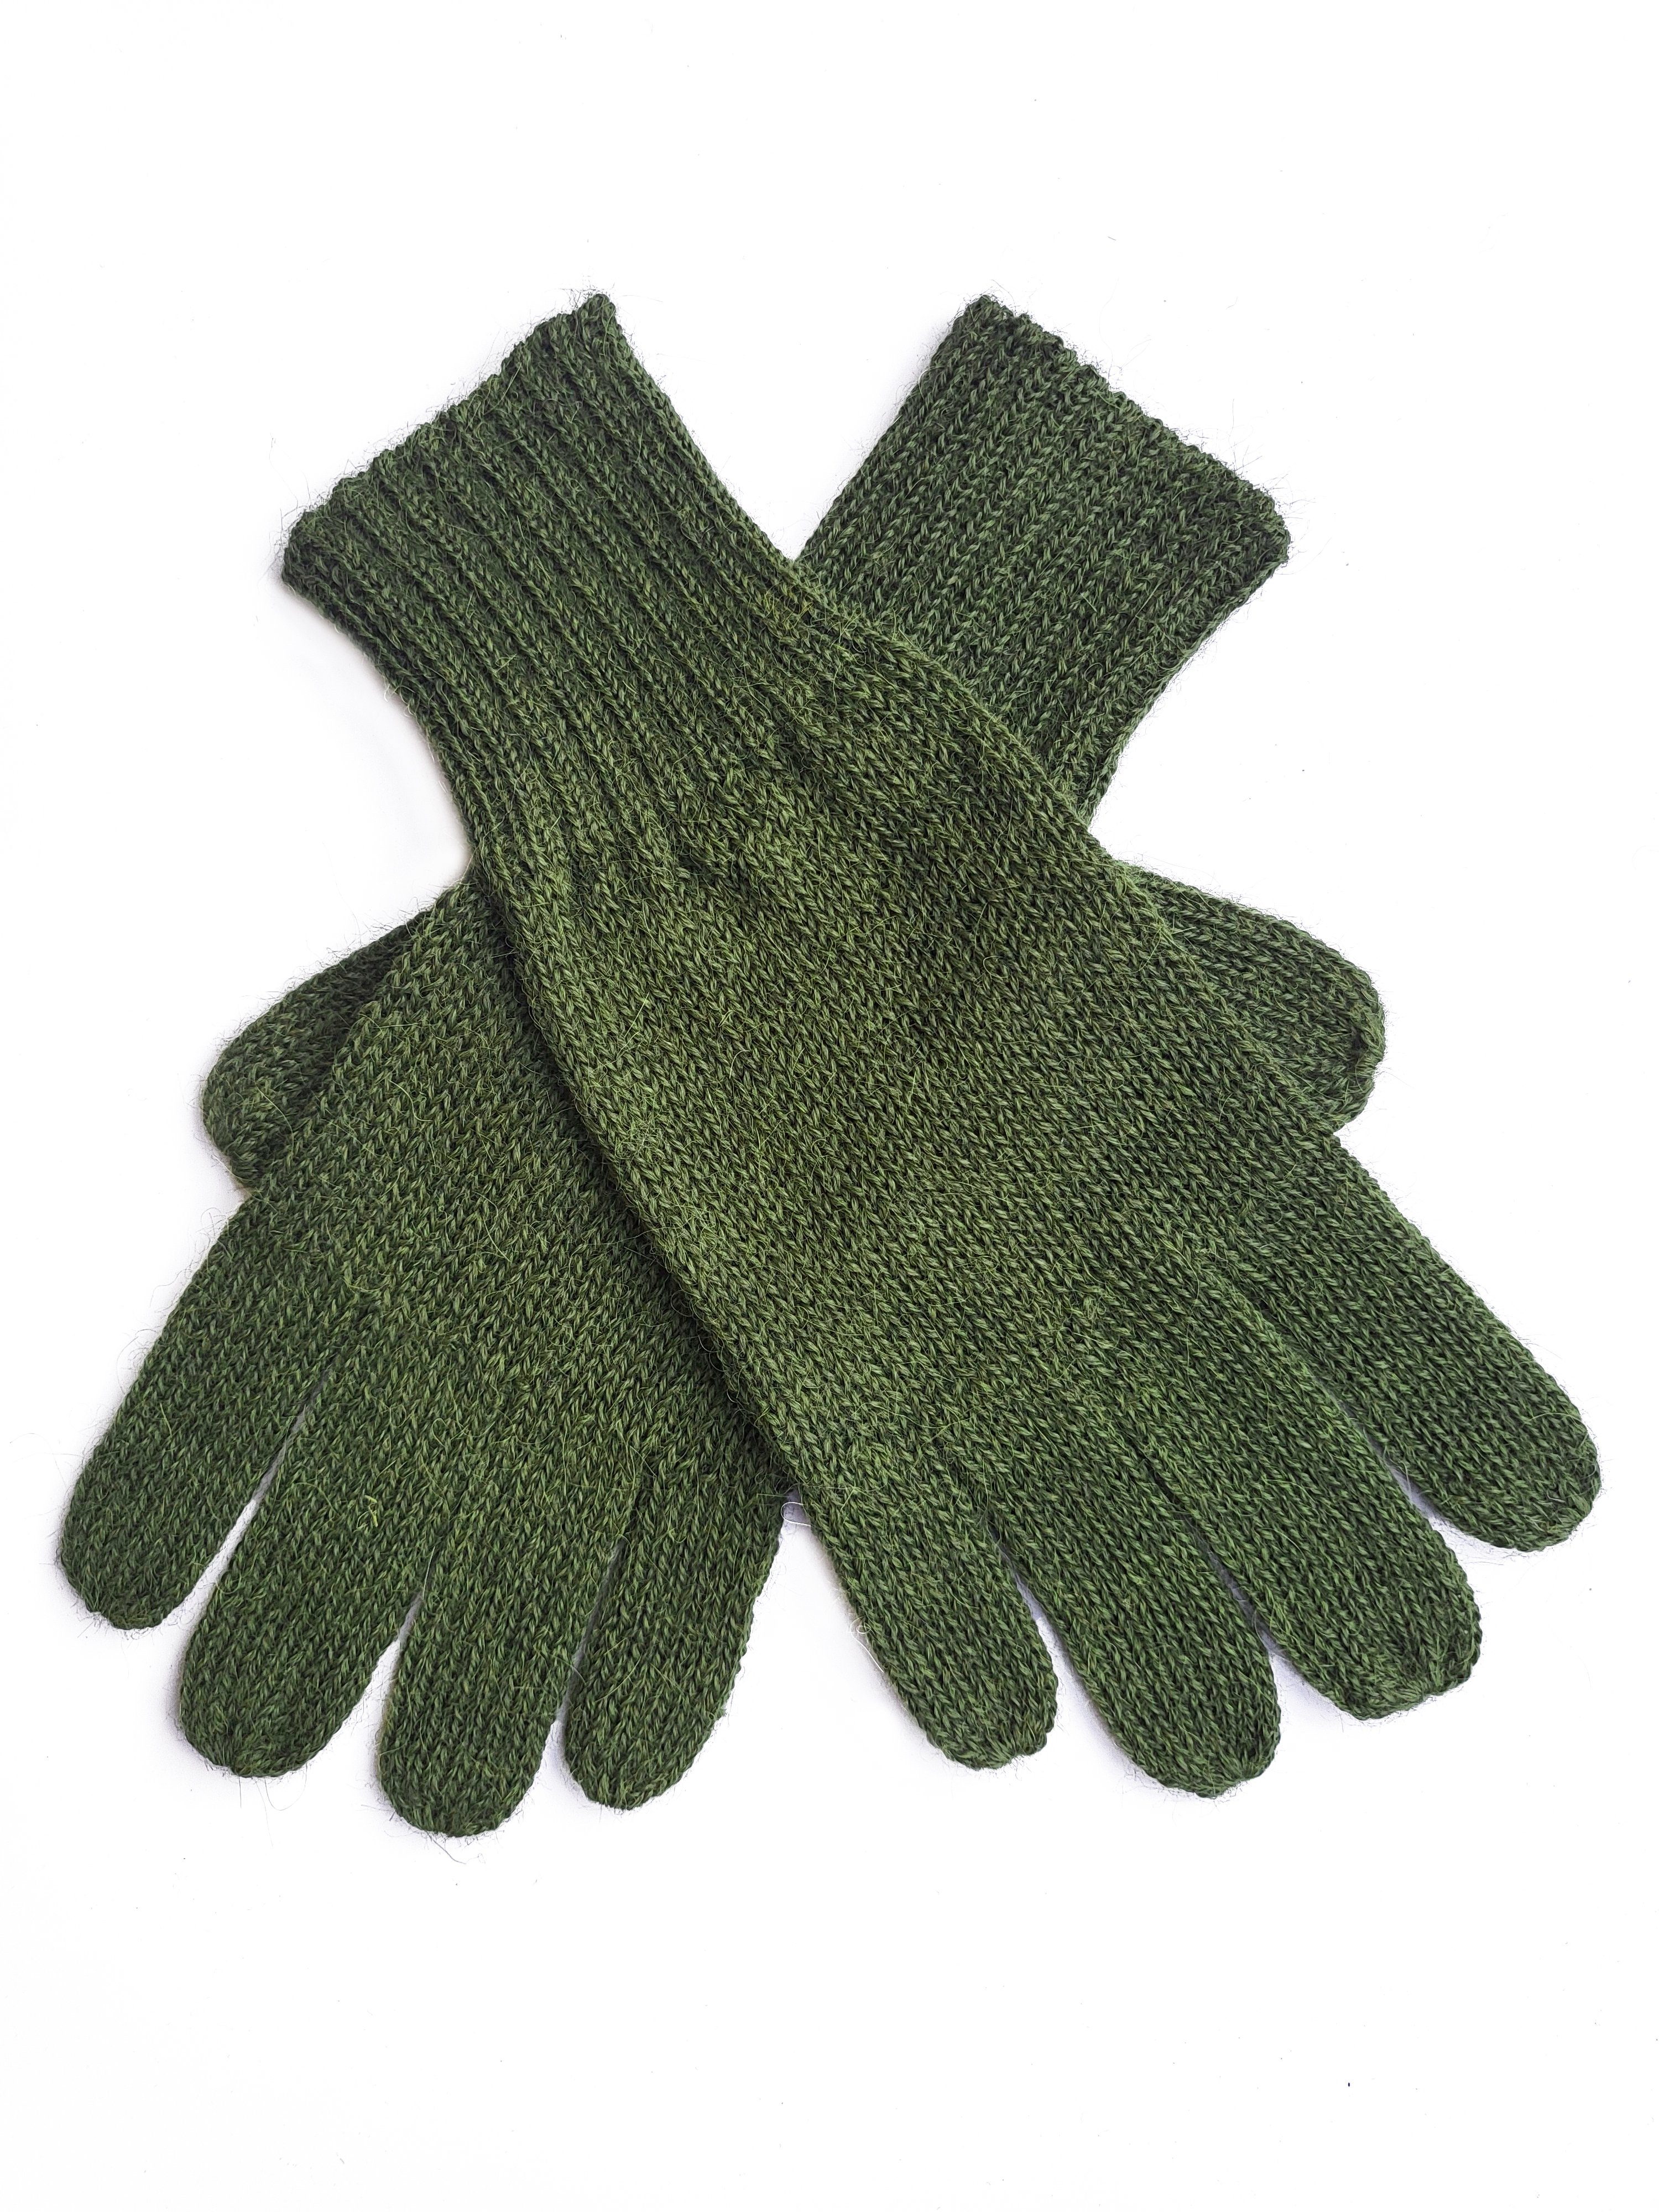 100% grün Alpaka oliv Guantino Posh Strickhandschuhe Fingerhandschuhe Gear Alpakawolle aus